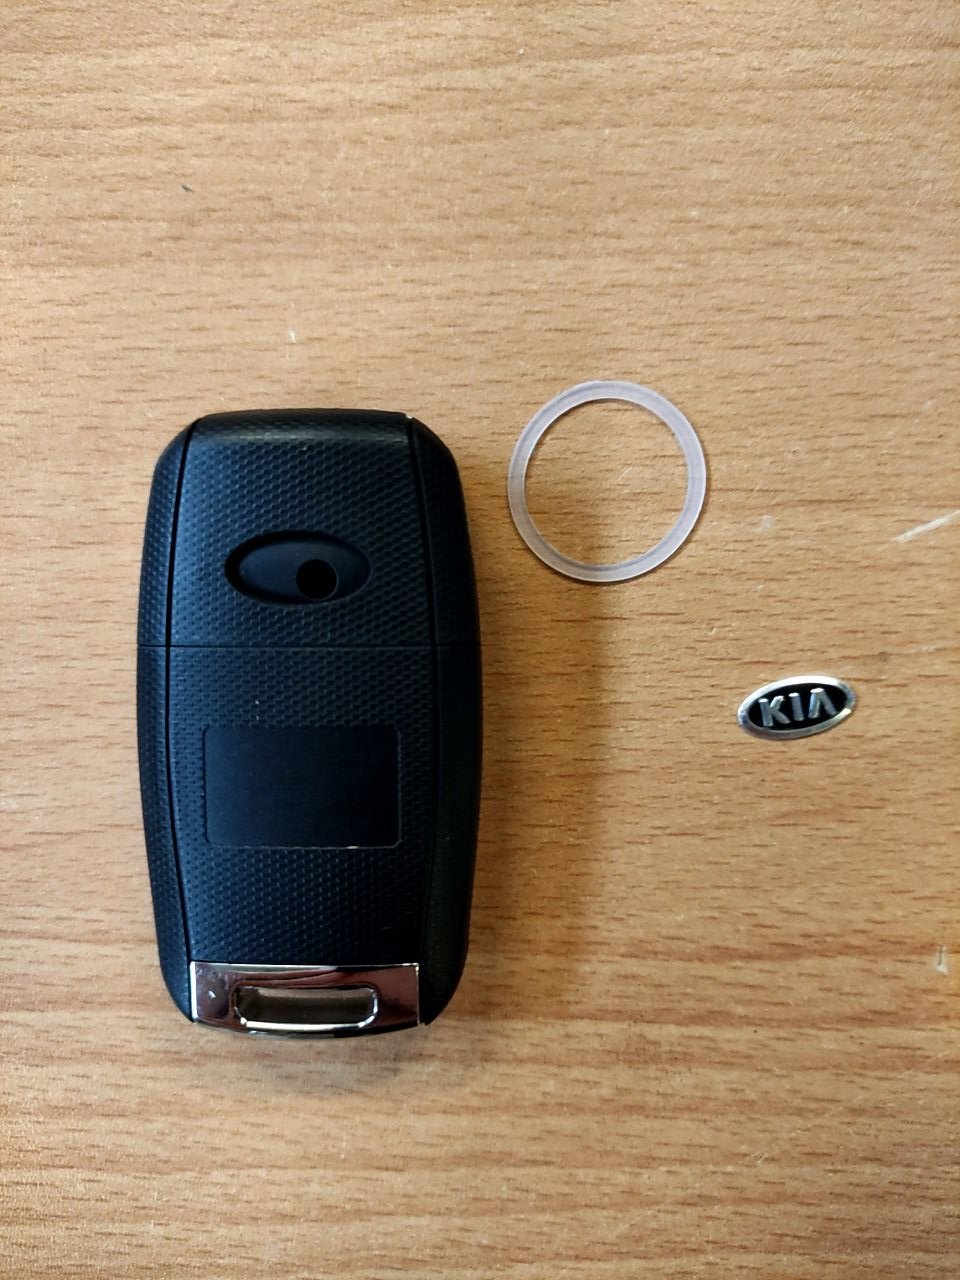 Náhradní klíče od auta KIa  